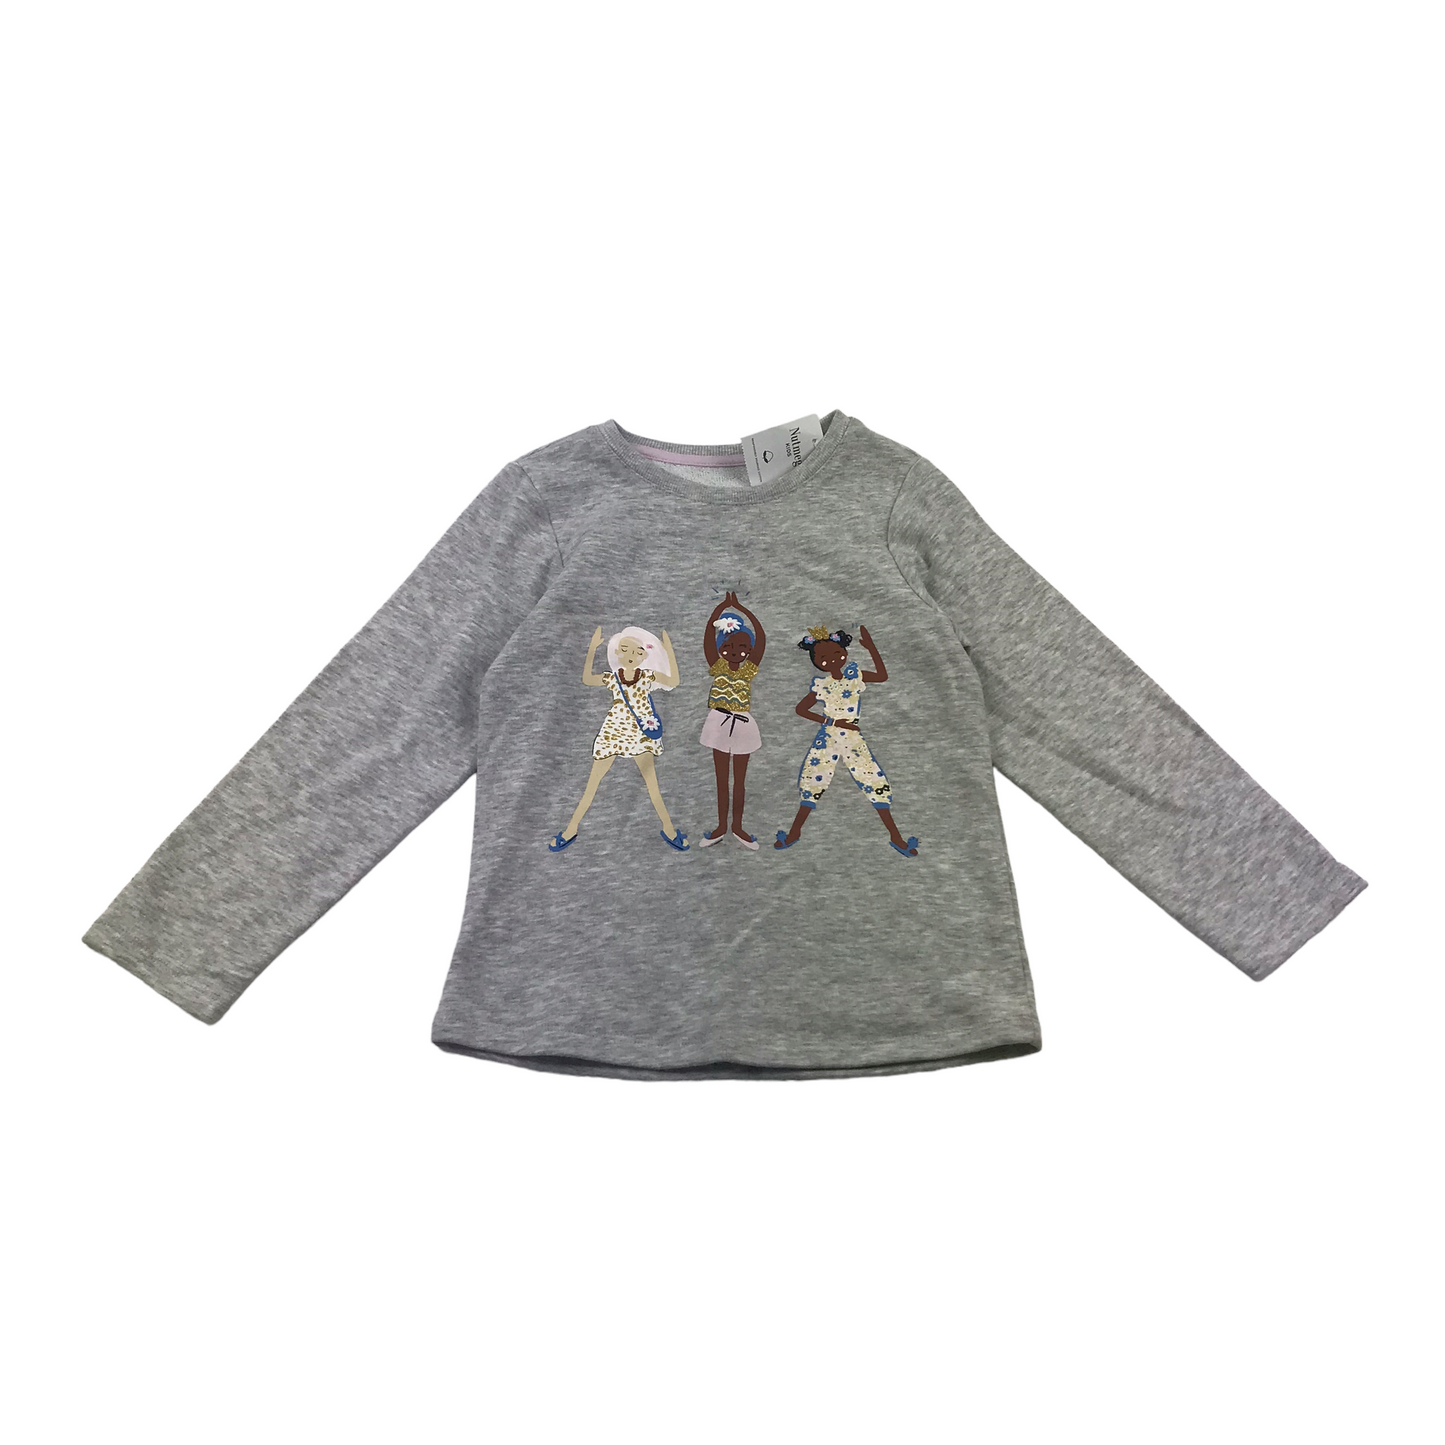 Nutmeg Grey Print Sweater Jumper age 5